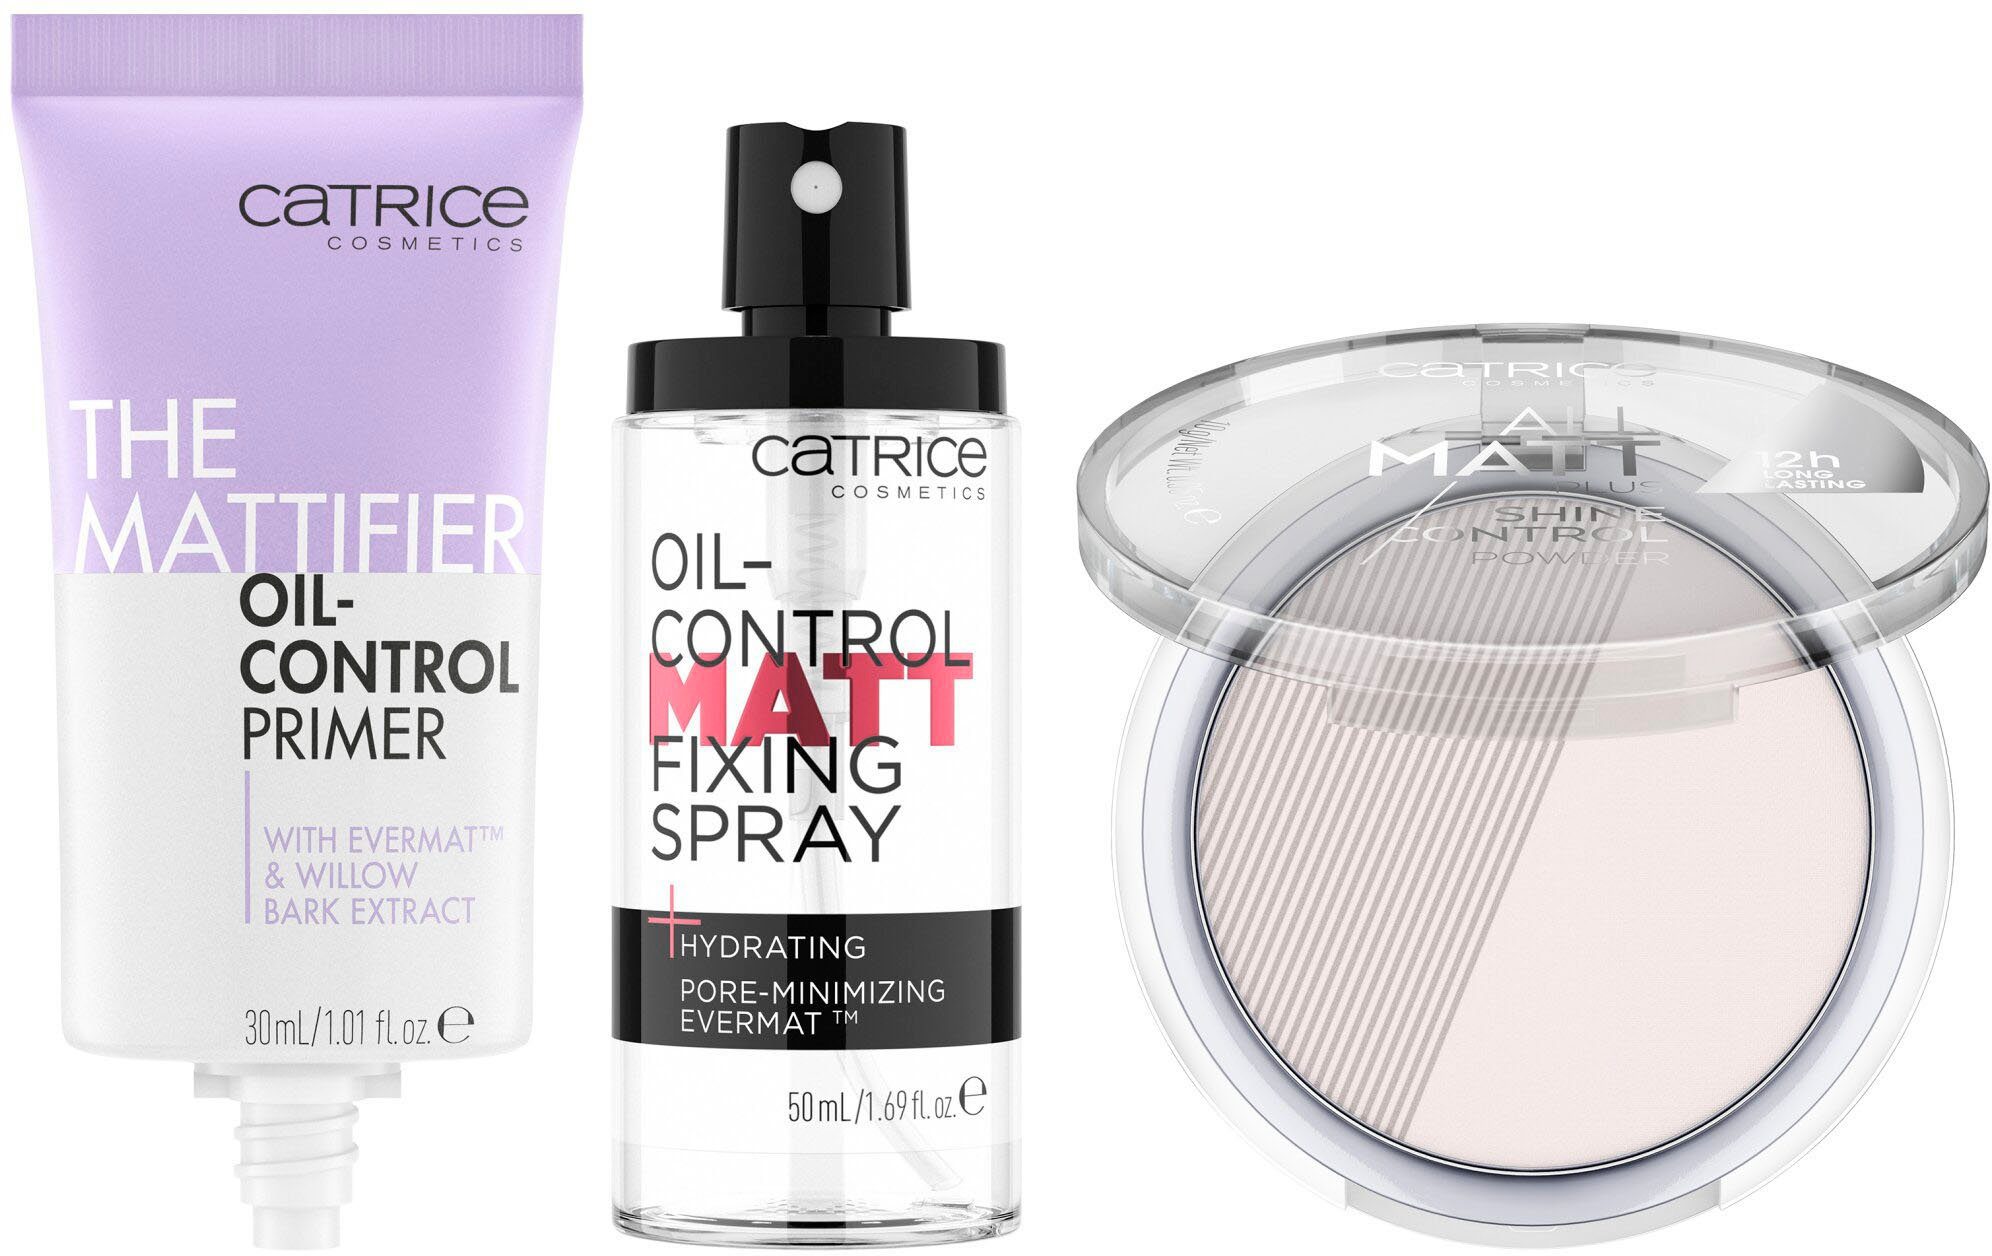 Matte Set, Face Make-up 3-tlg. Pro Catrice The Set